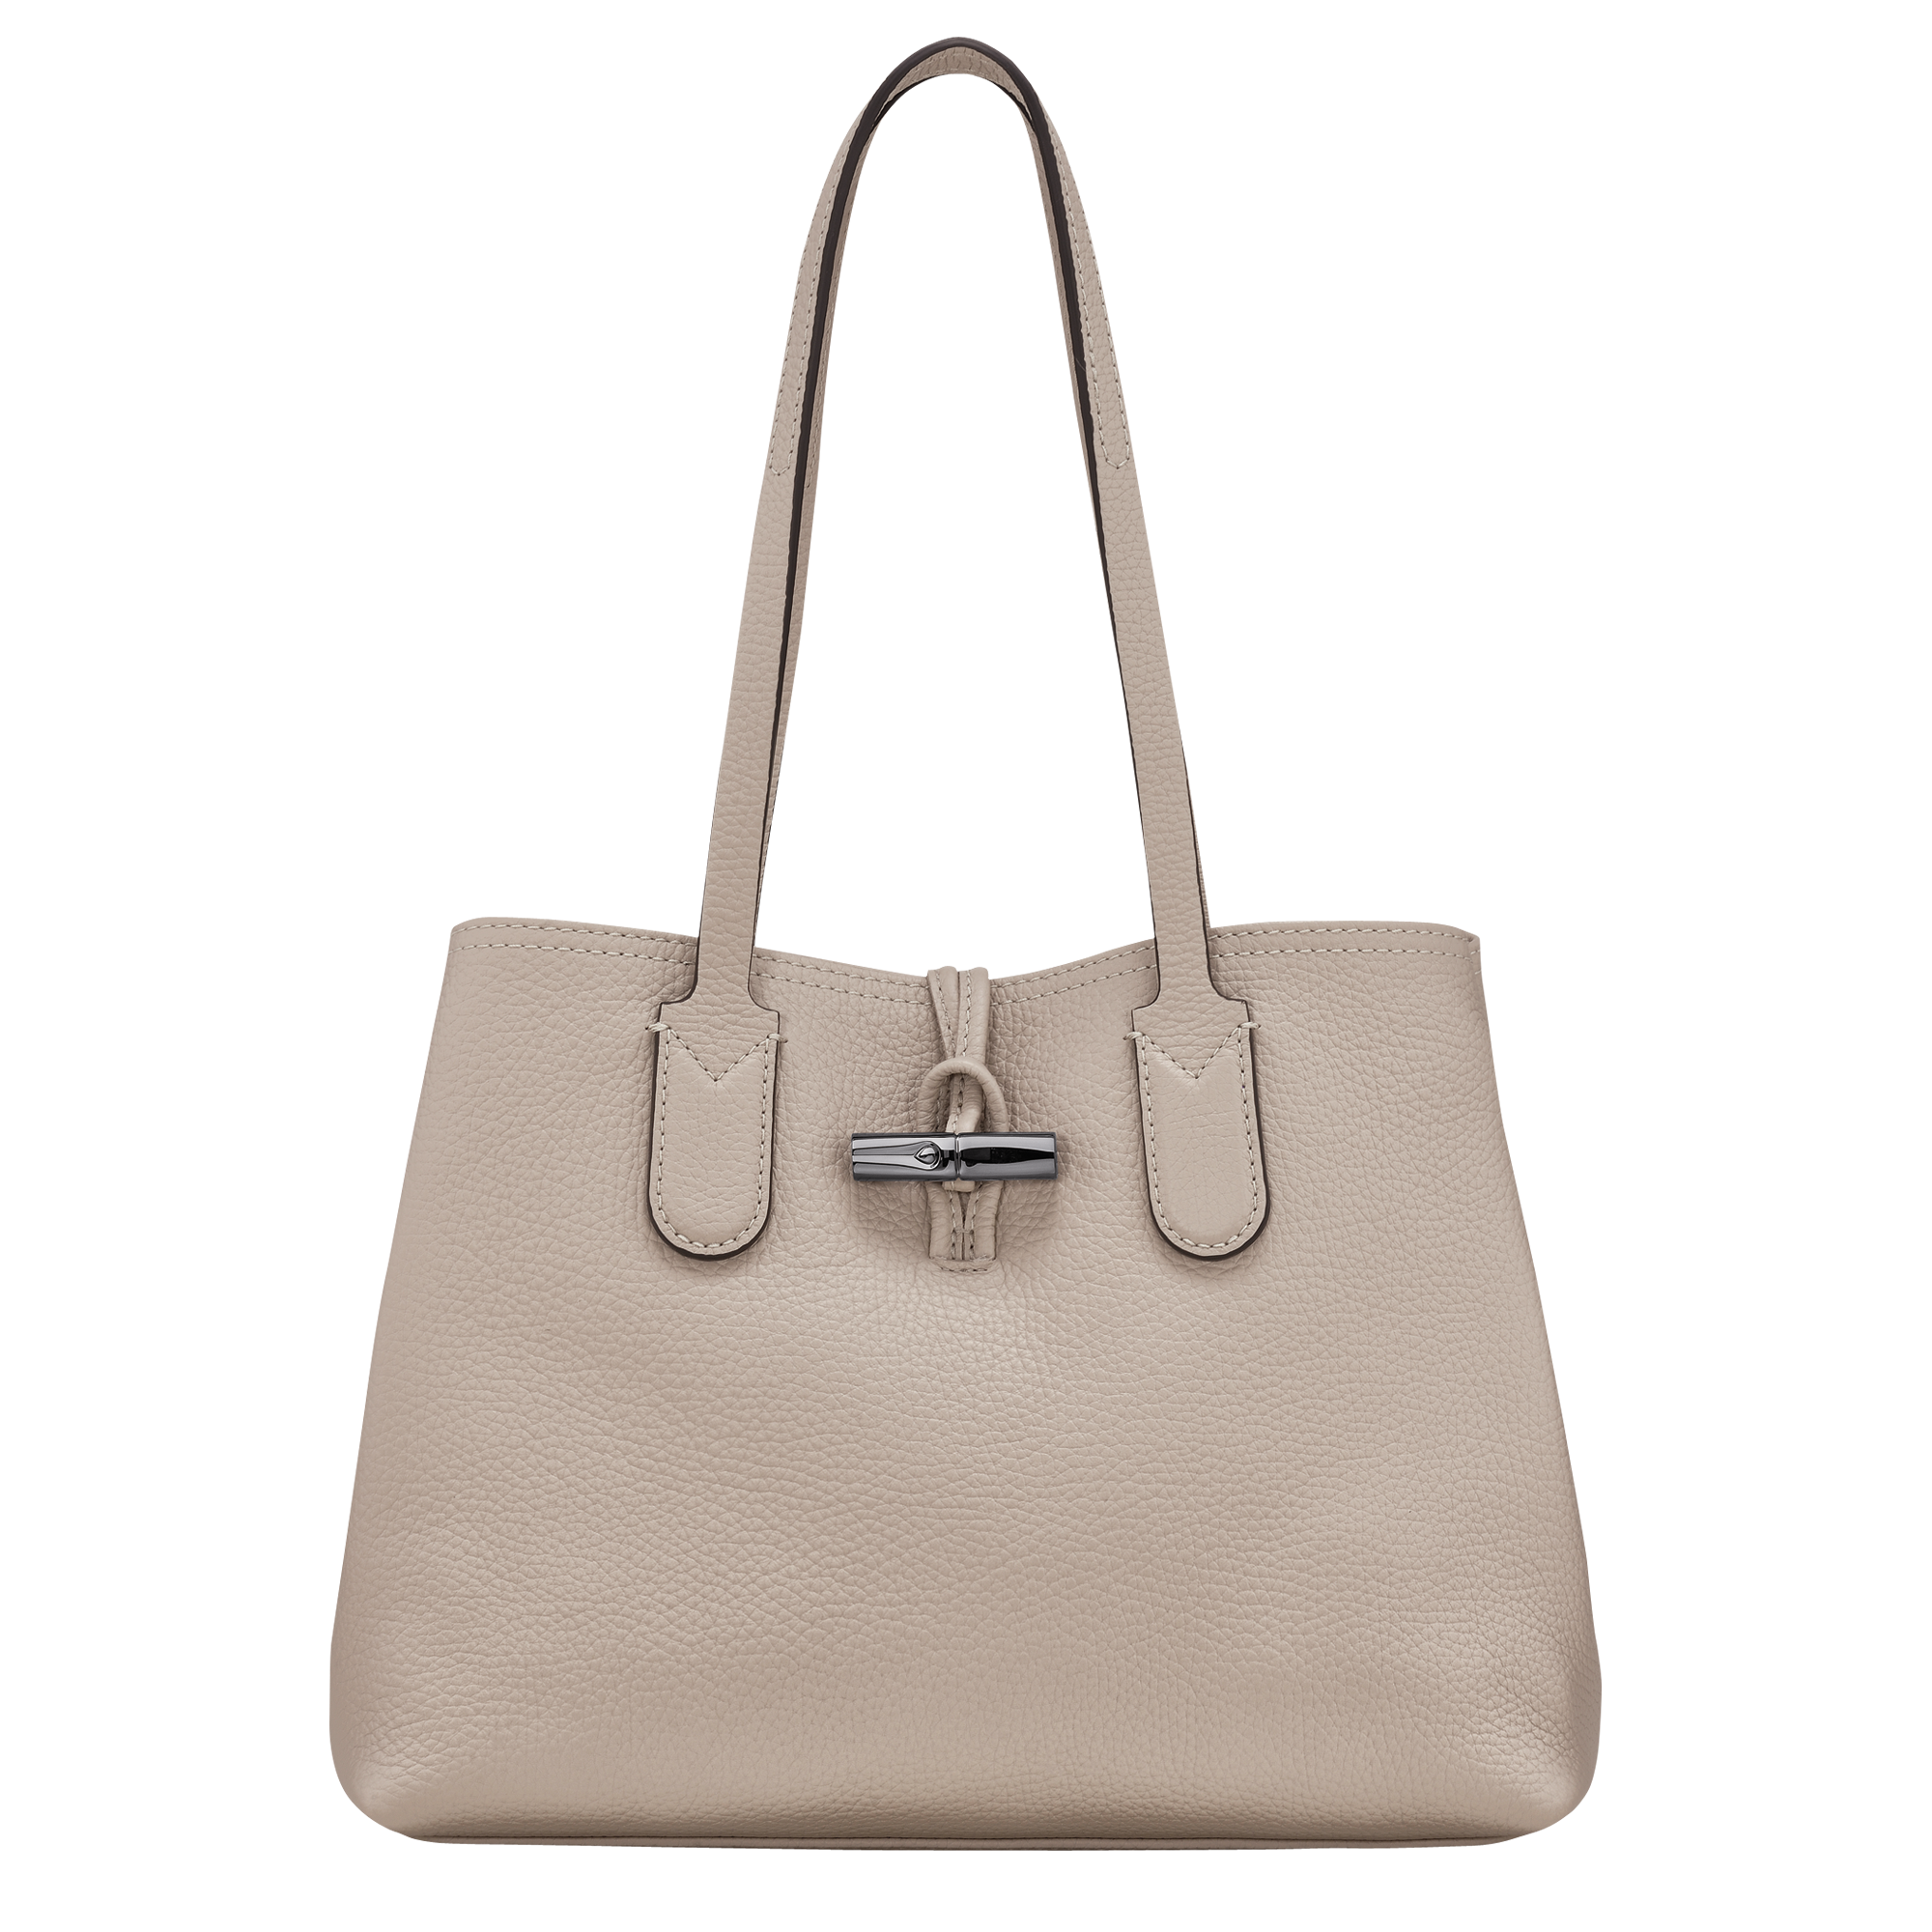 Longchamp Small Leather Roseau Shoulder Bag